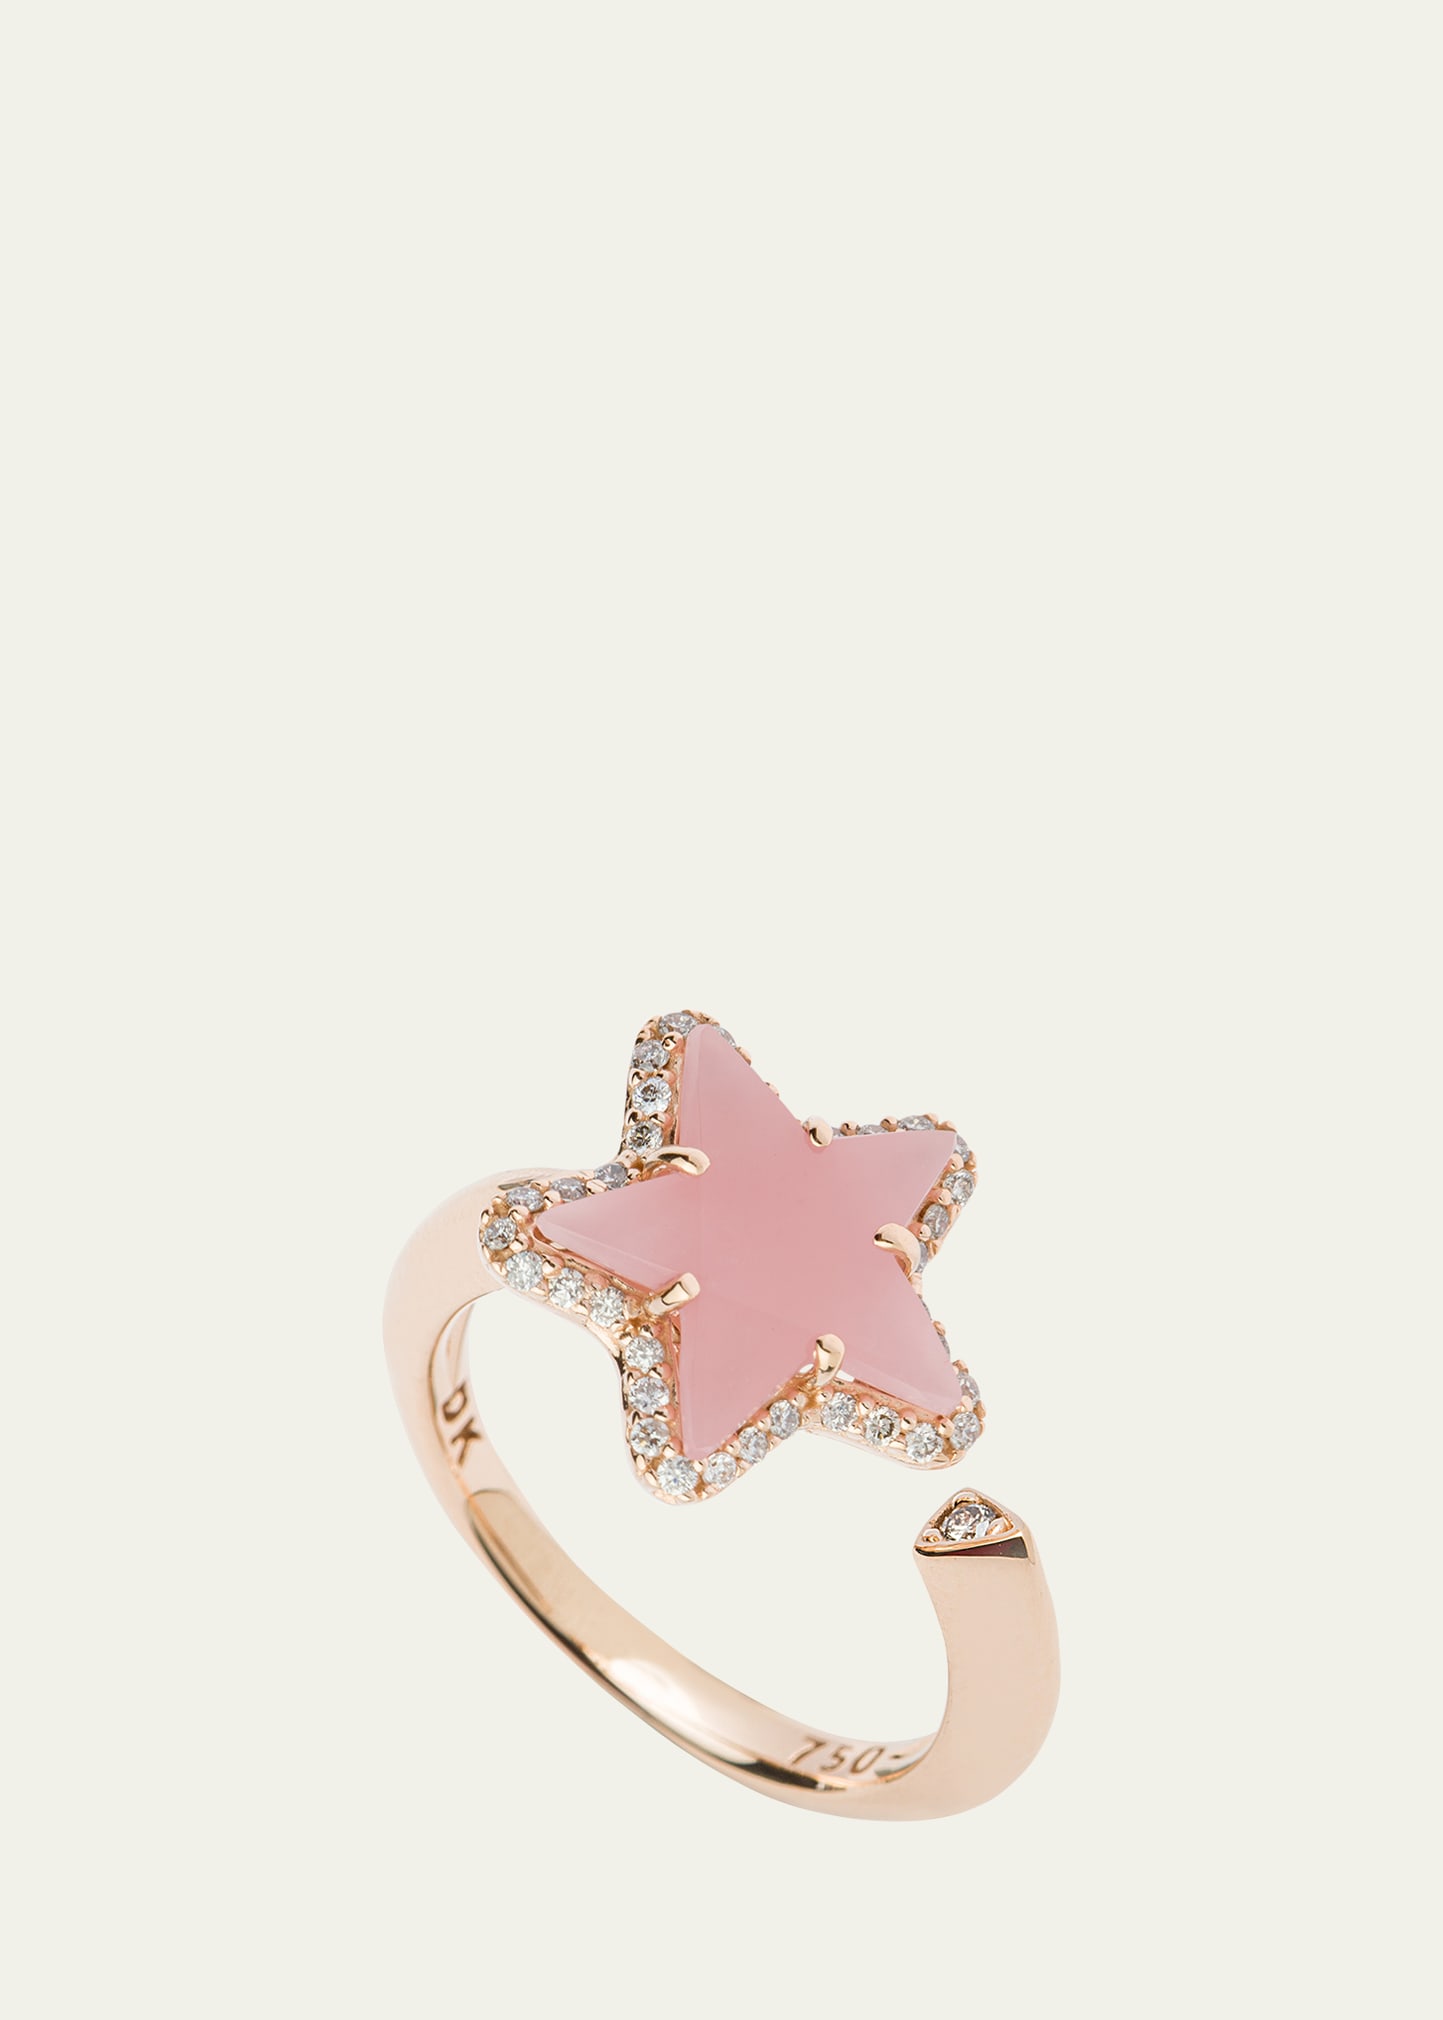 Daniella Kronfle 18k Rose Gold Star Ring With Rose Quartz And Diamonds